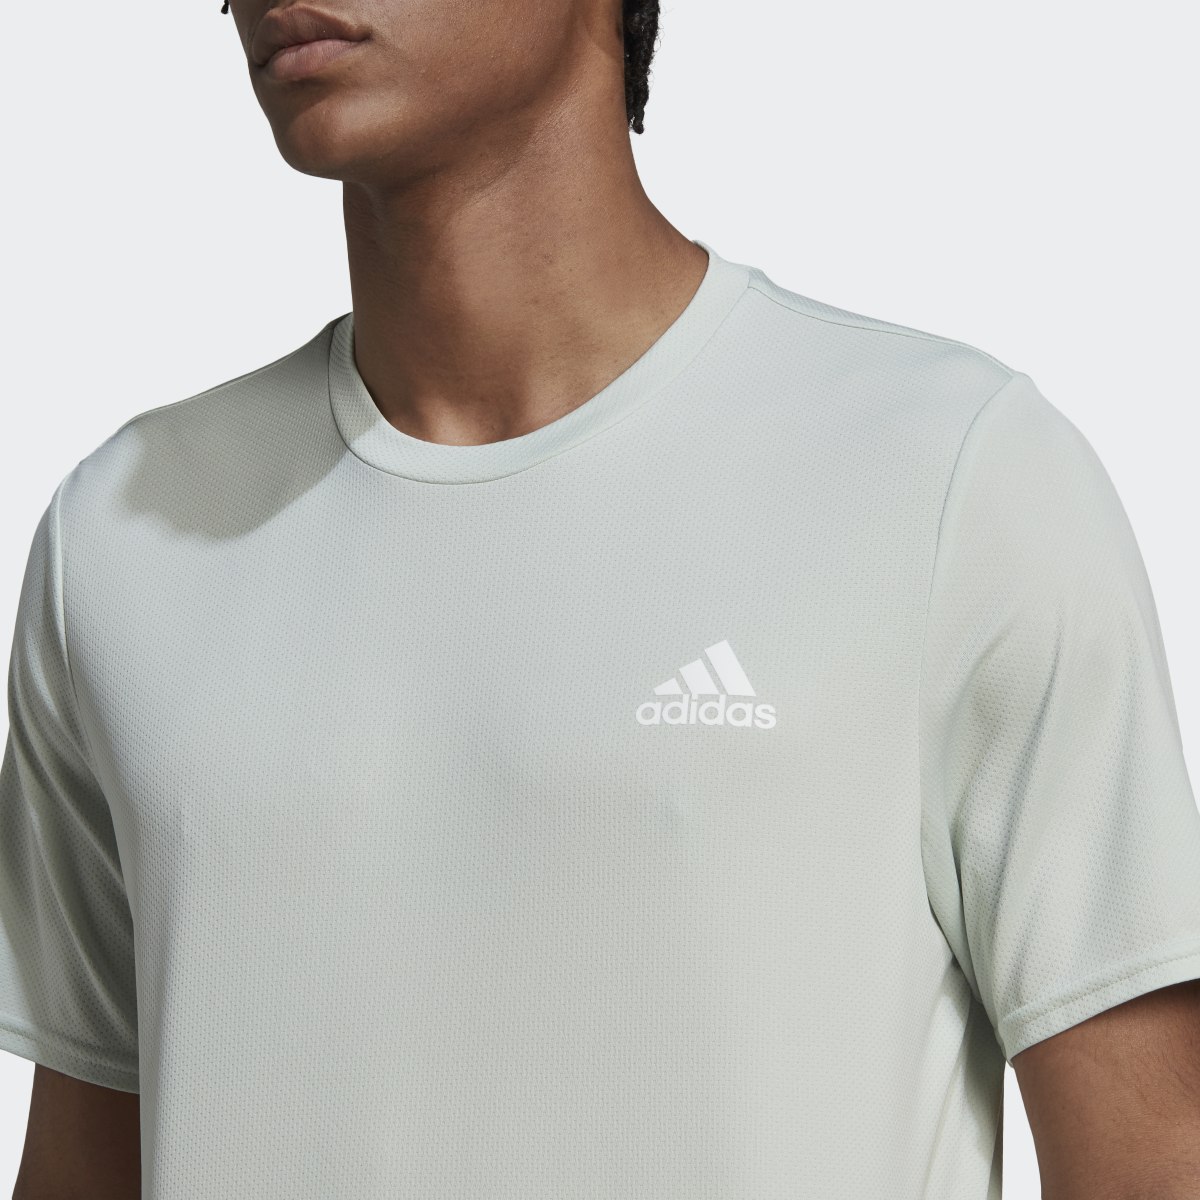 Adidas T-shirt AEROREADY Designed for Movement. 6